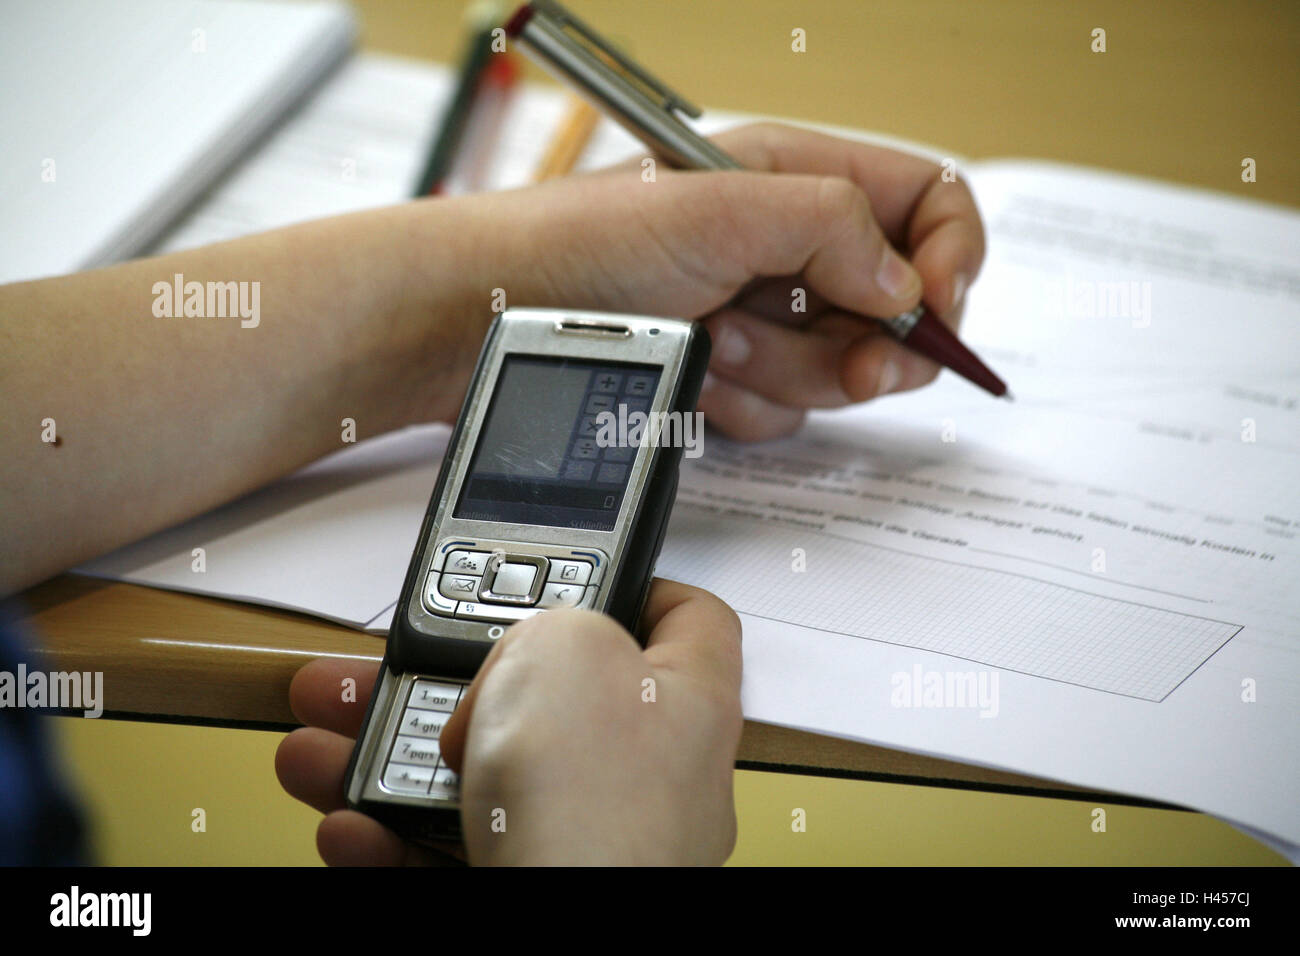 Schoolboy, school work, mobile phone, electronic calculator, medium close-up, detail, Stock Photo